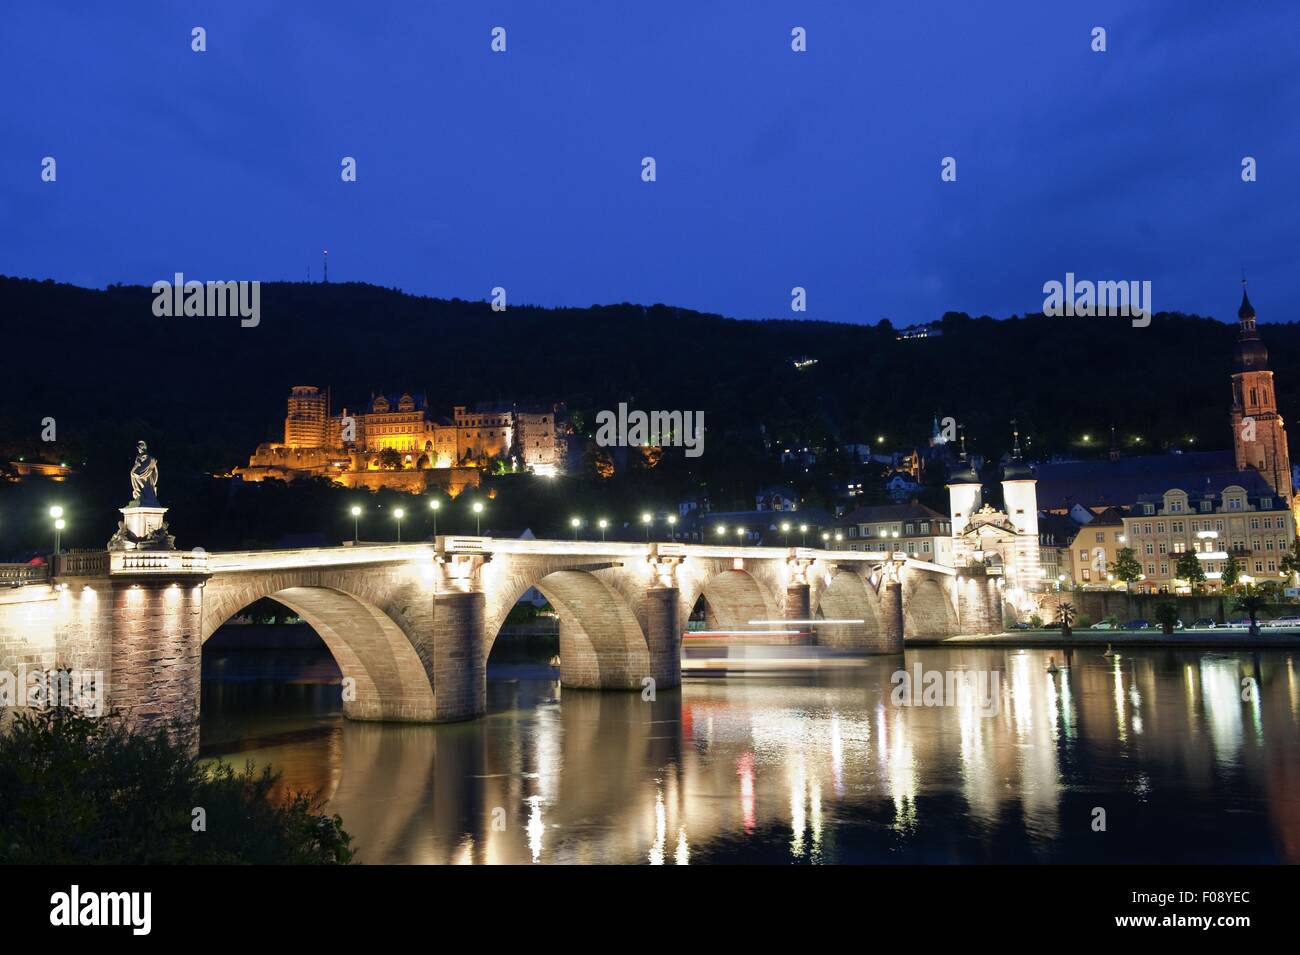 Illuminated Karl-Theodor-Bridge at evening in Heidelberg, Germany Stock Photo